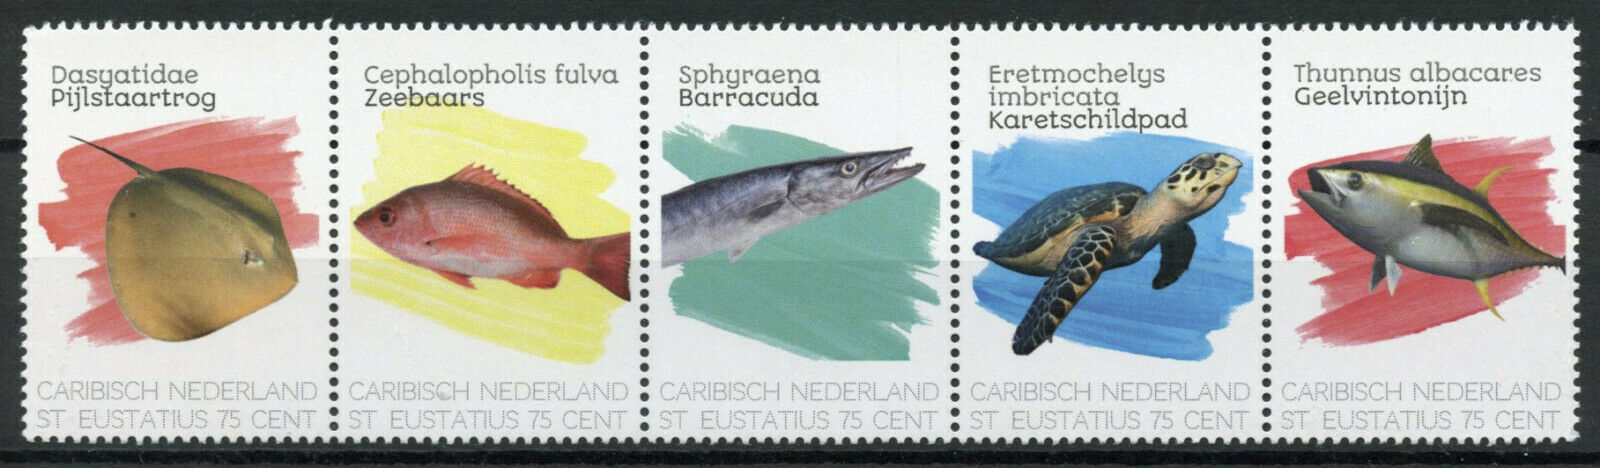 St Eustatius Caribbean Netherlands Fish Stamps 2020 MNH Rays Turtles 5v Strip